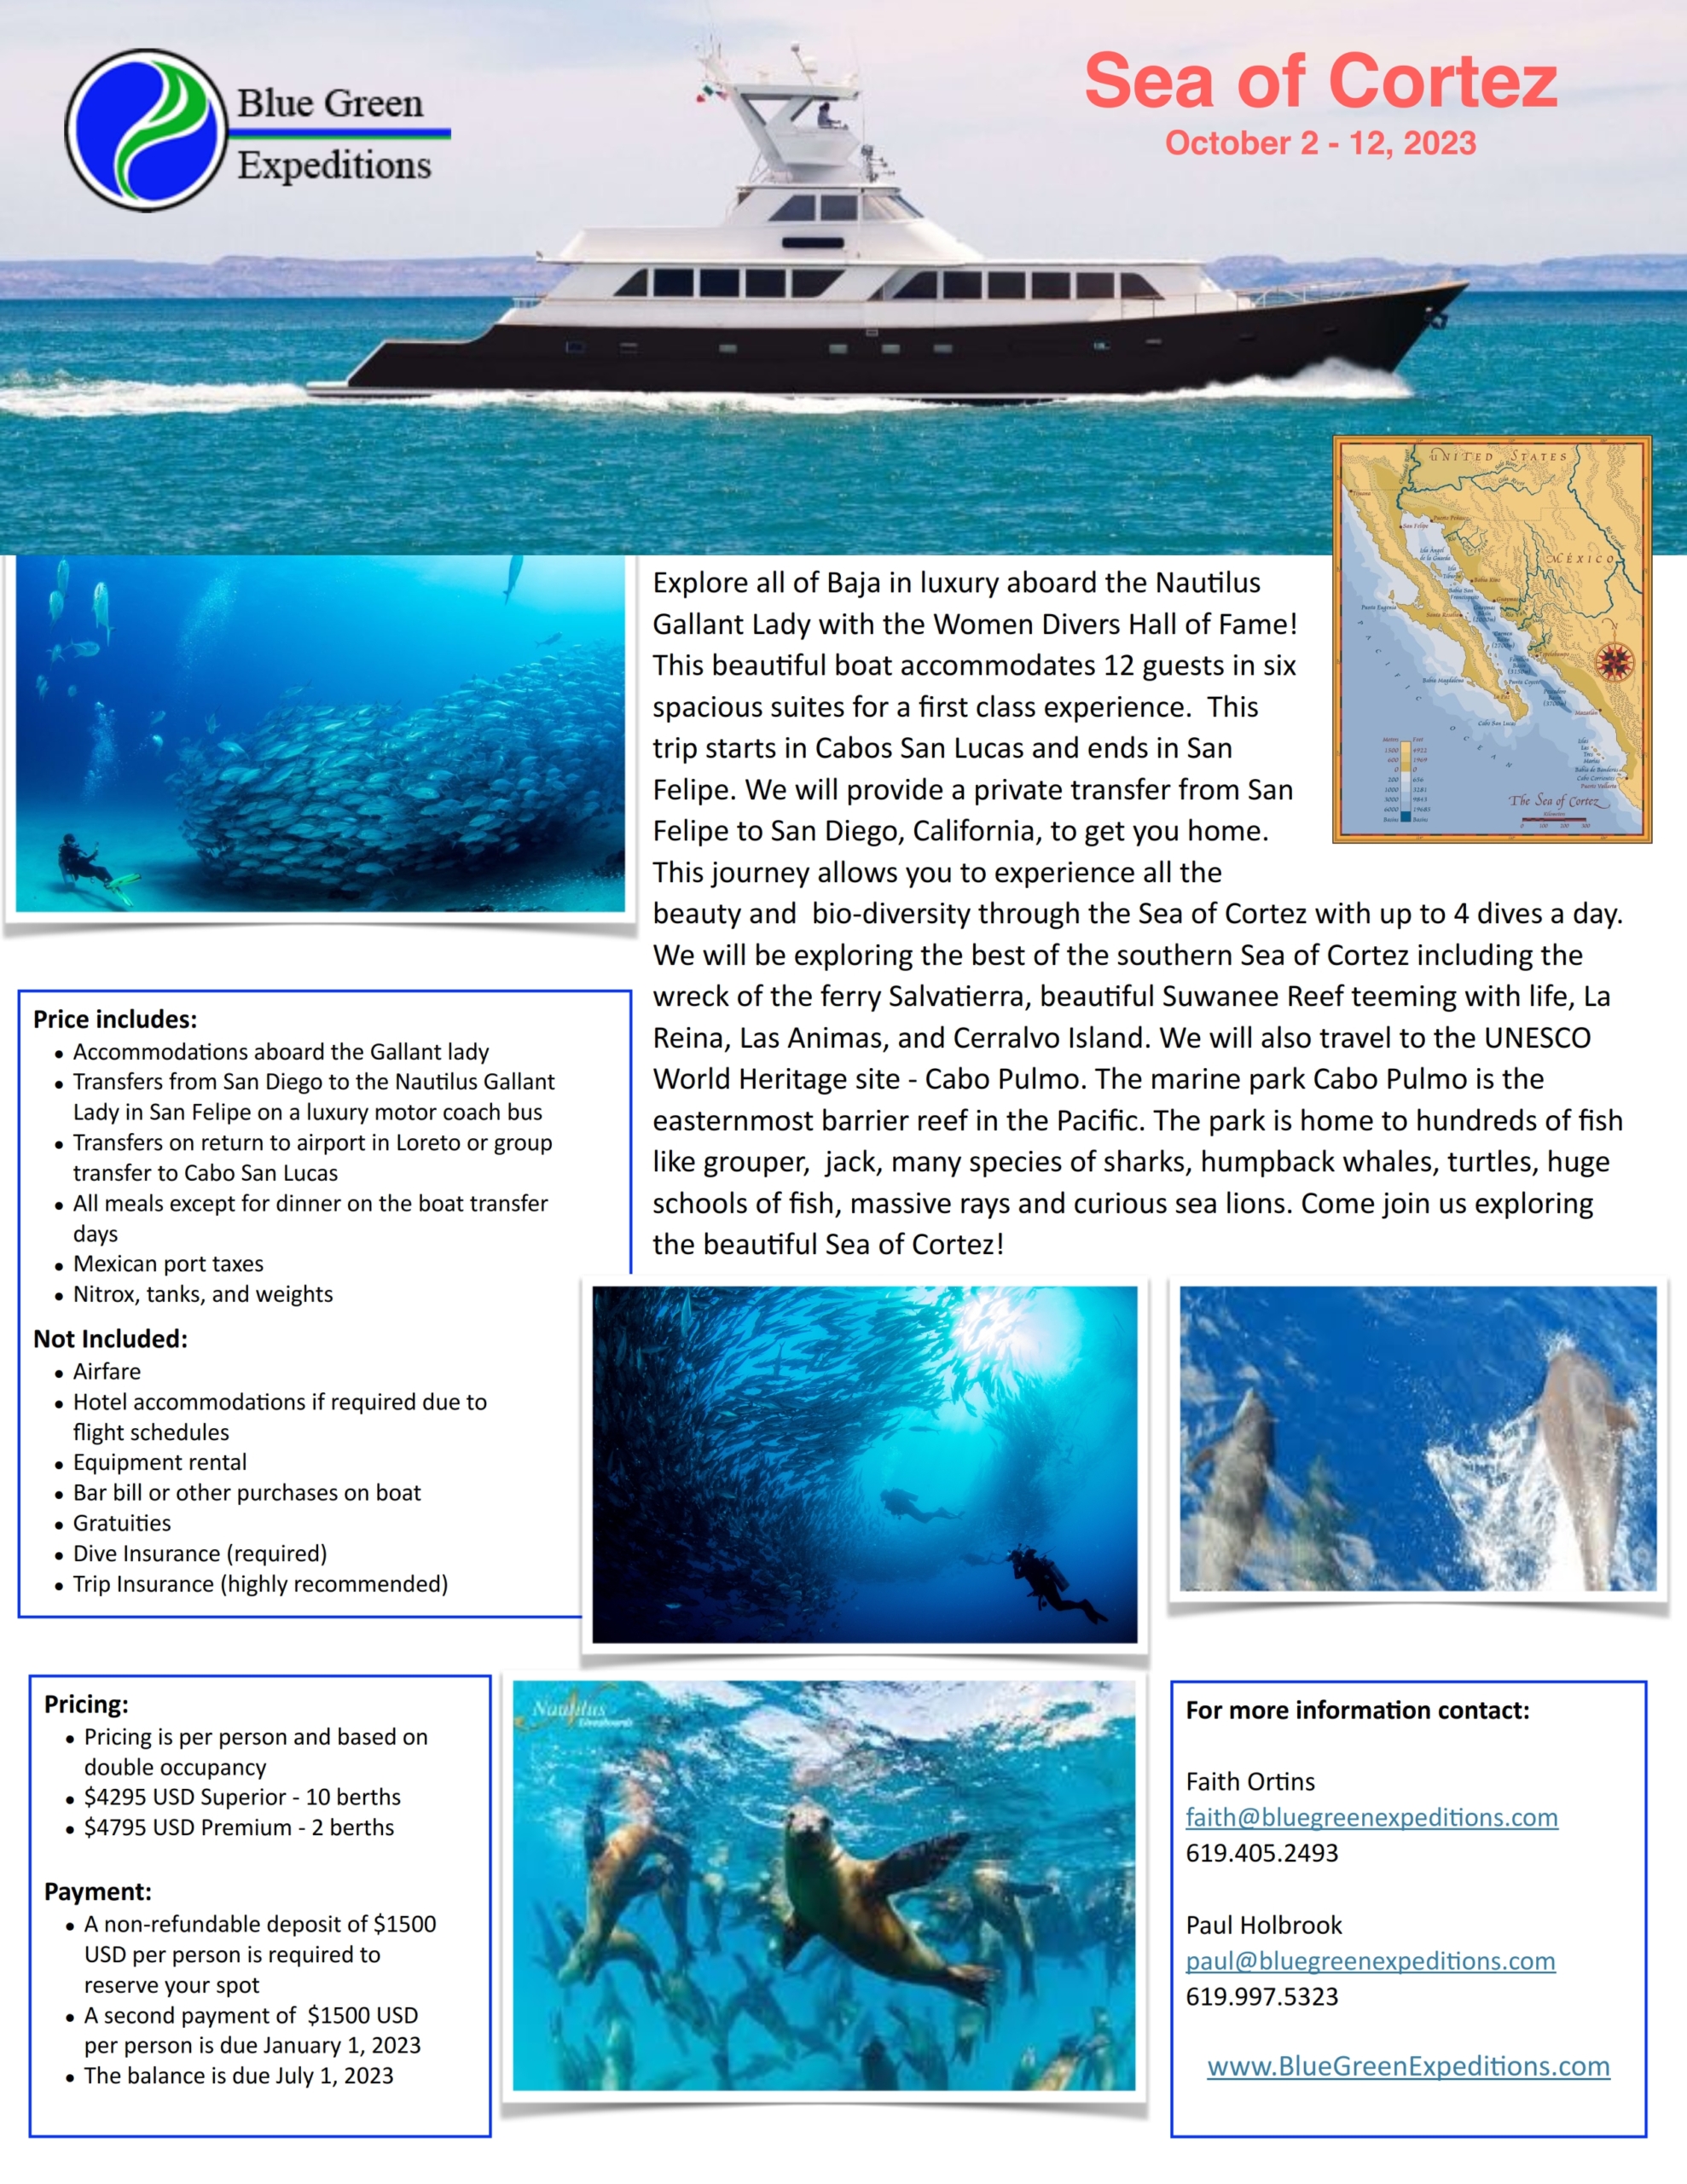 Sea of Cortez WDHOF expedition: October 2 - 12, 2023